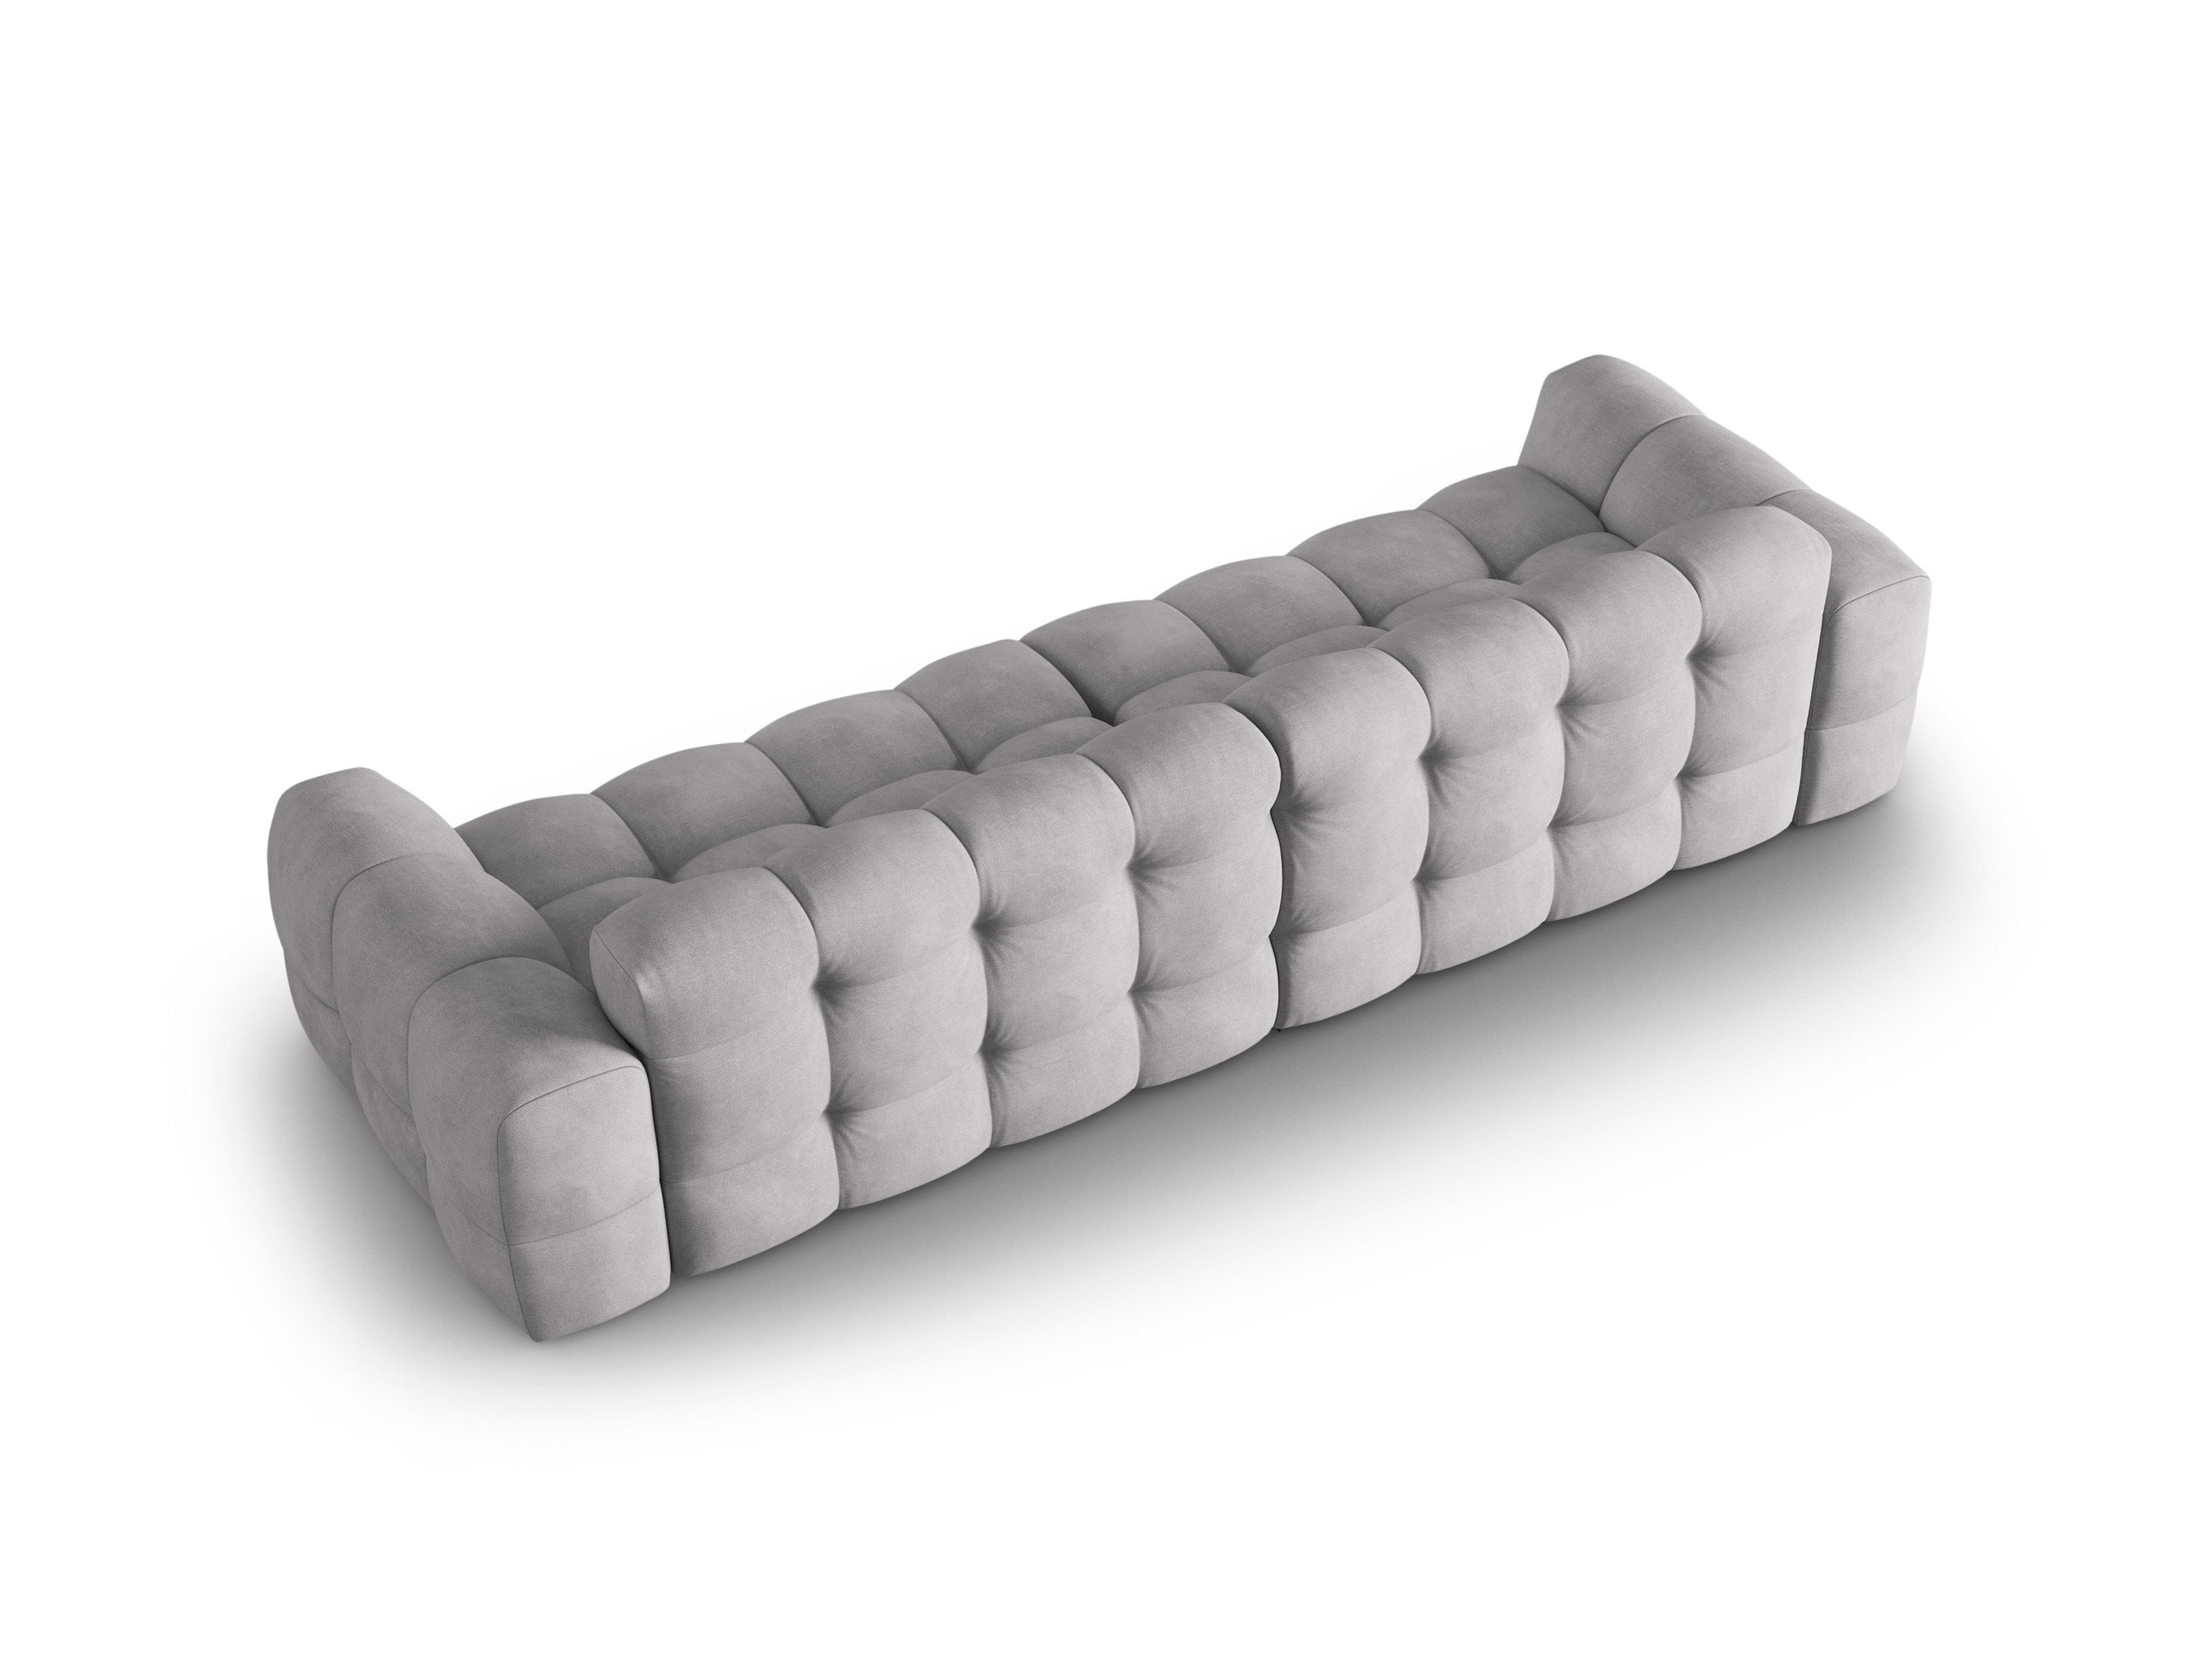 Sofa, "Nino", 4 Seats, 282x105x68
Made in Europe, Maison Heritage, Eye on Design